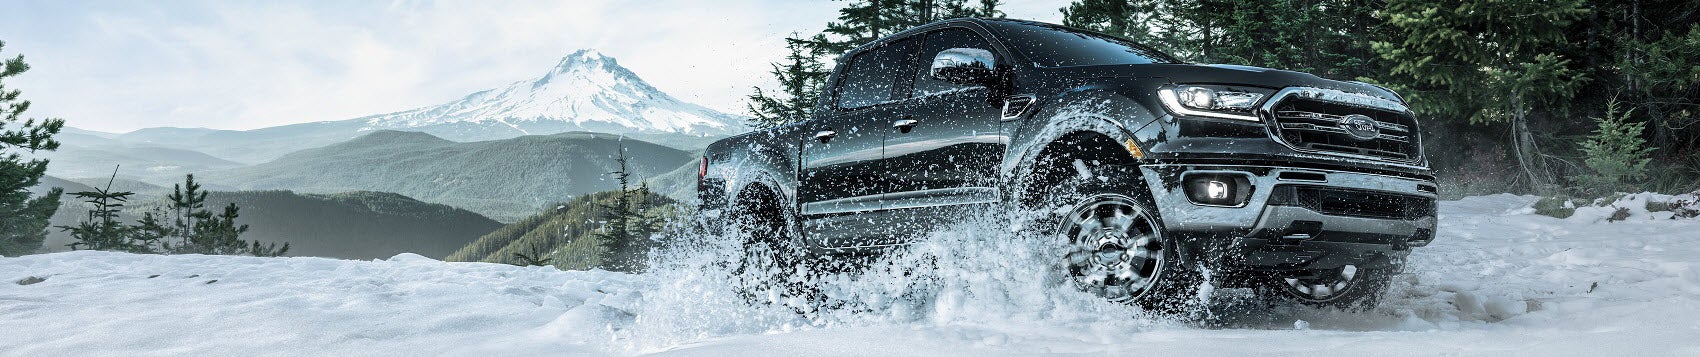 Ford Ranger Off-Roading in Snow